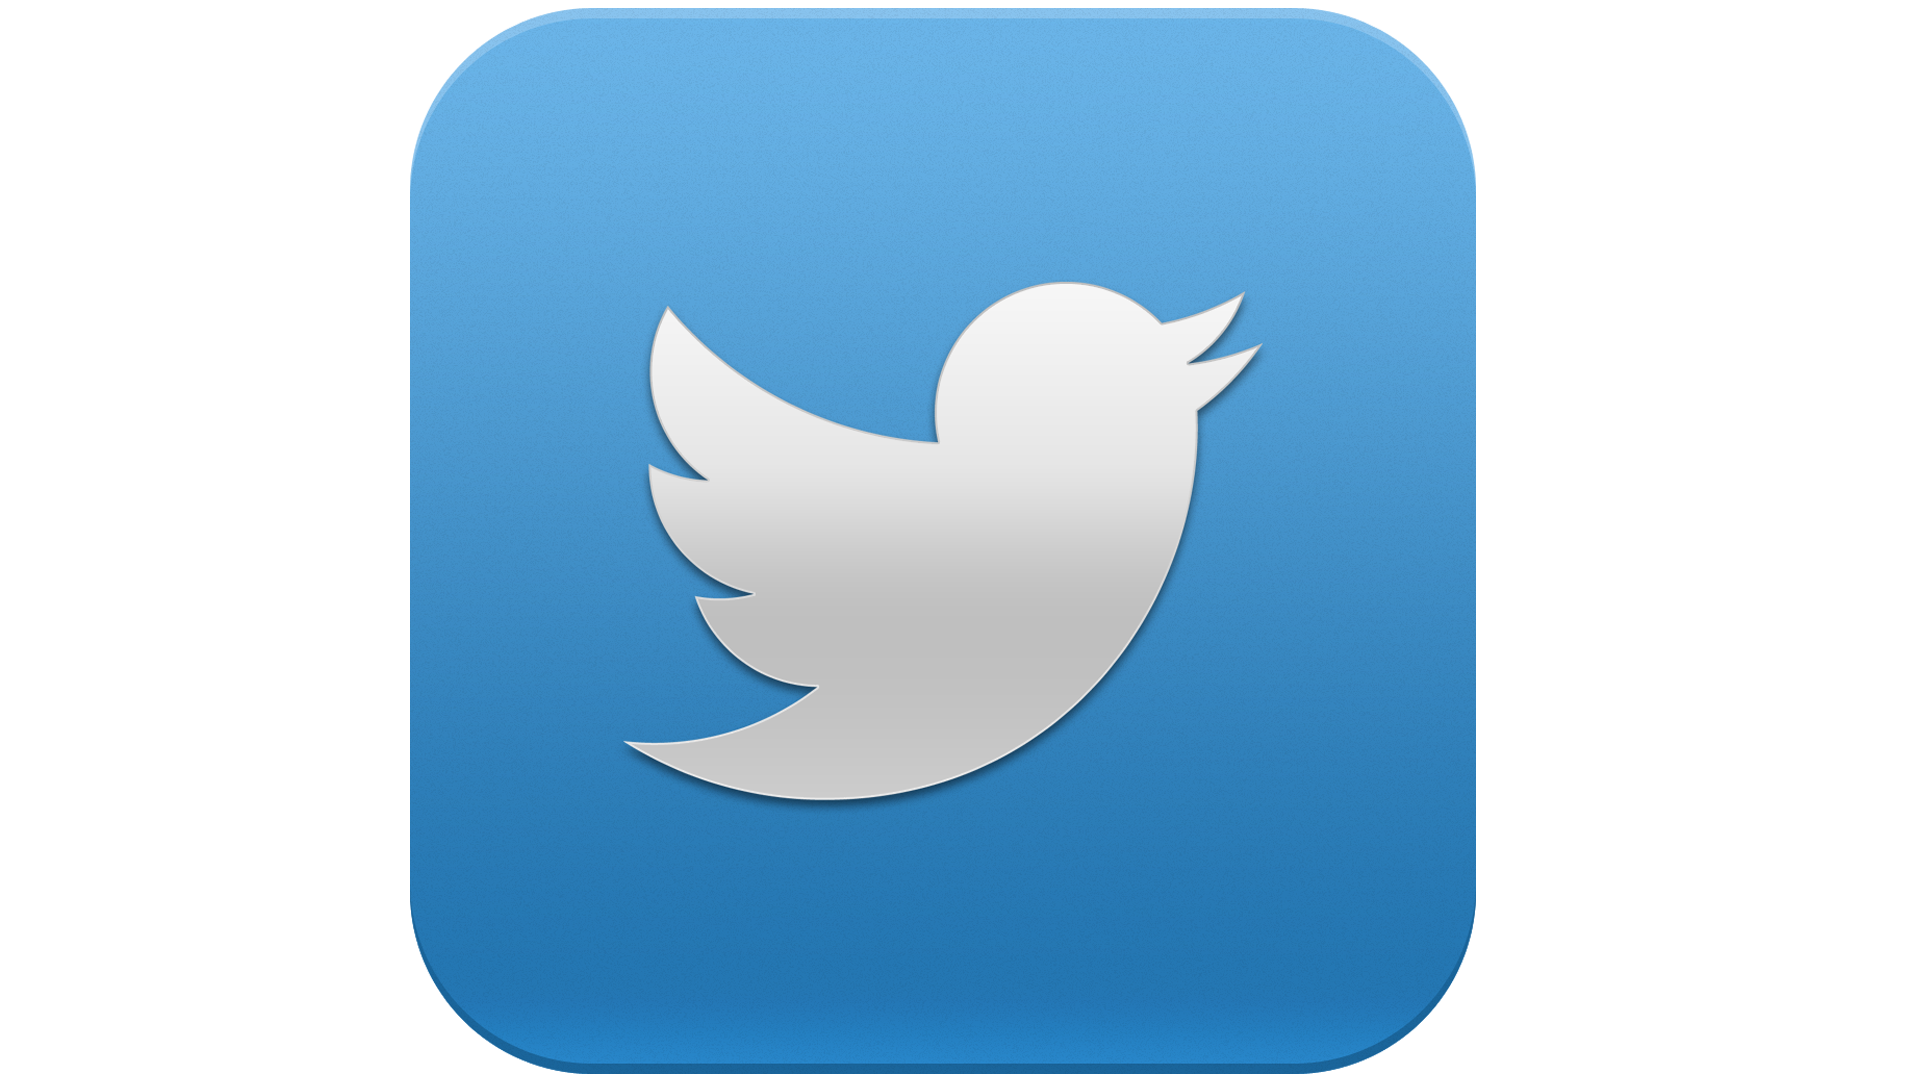 Twitter web. Твиттер. Иконка twitter. Логотип твиттера. Значек Тетера.